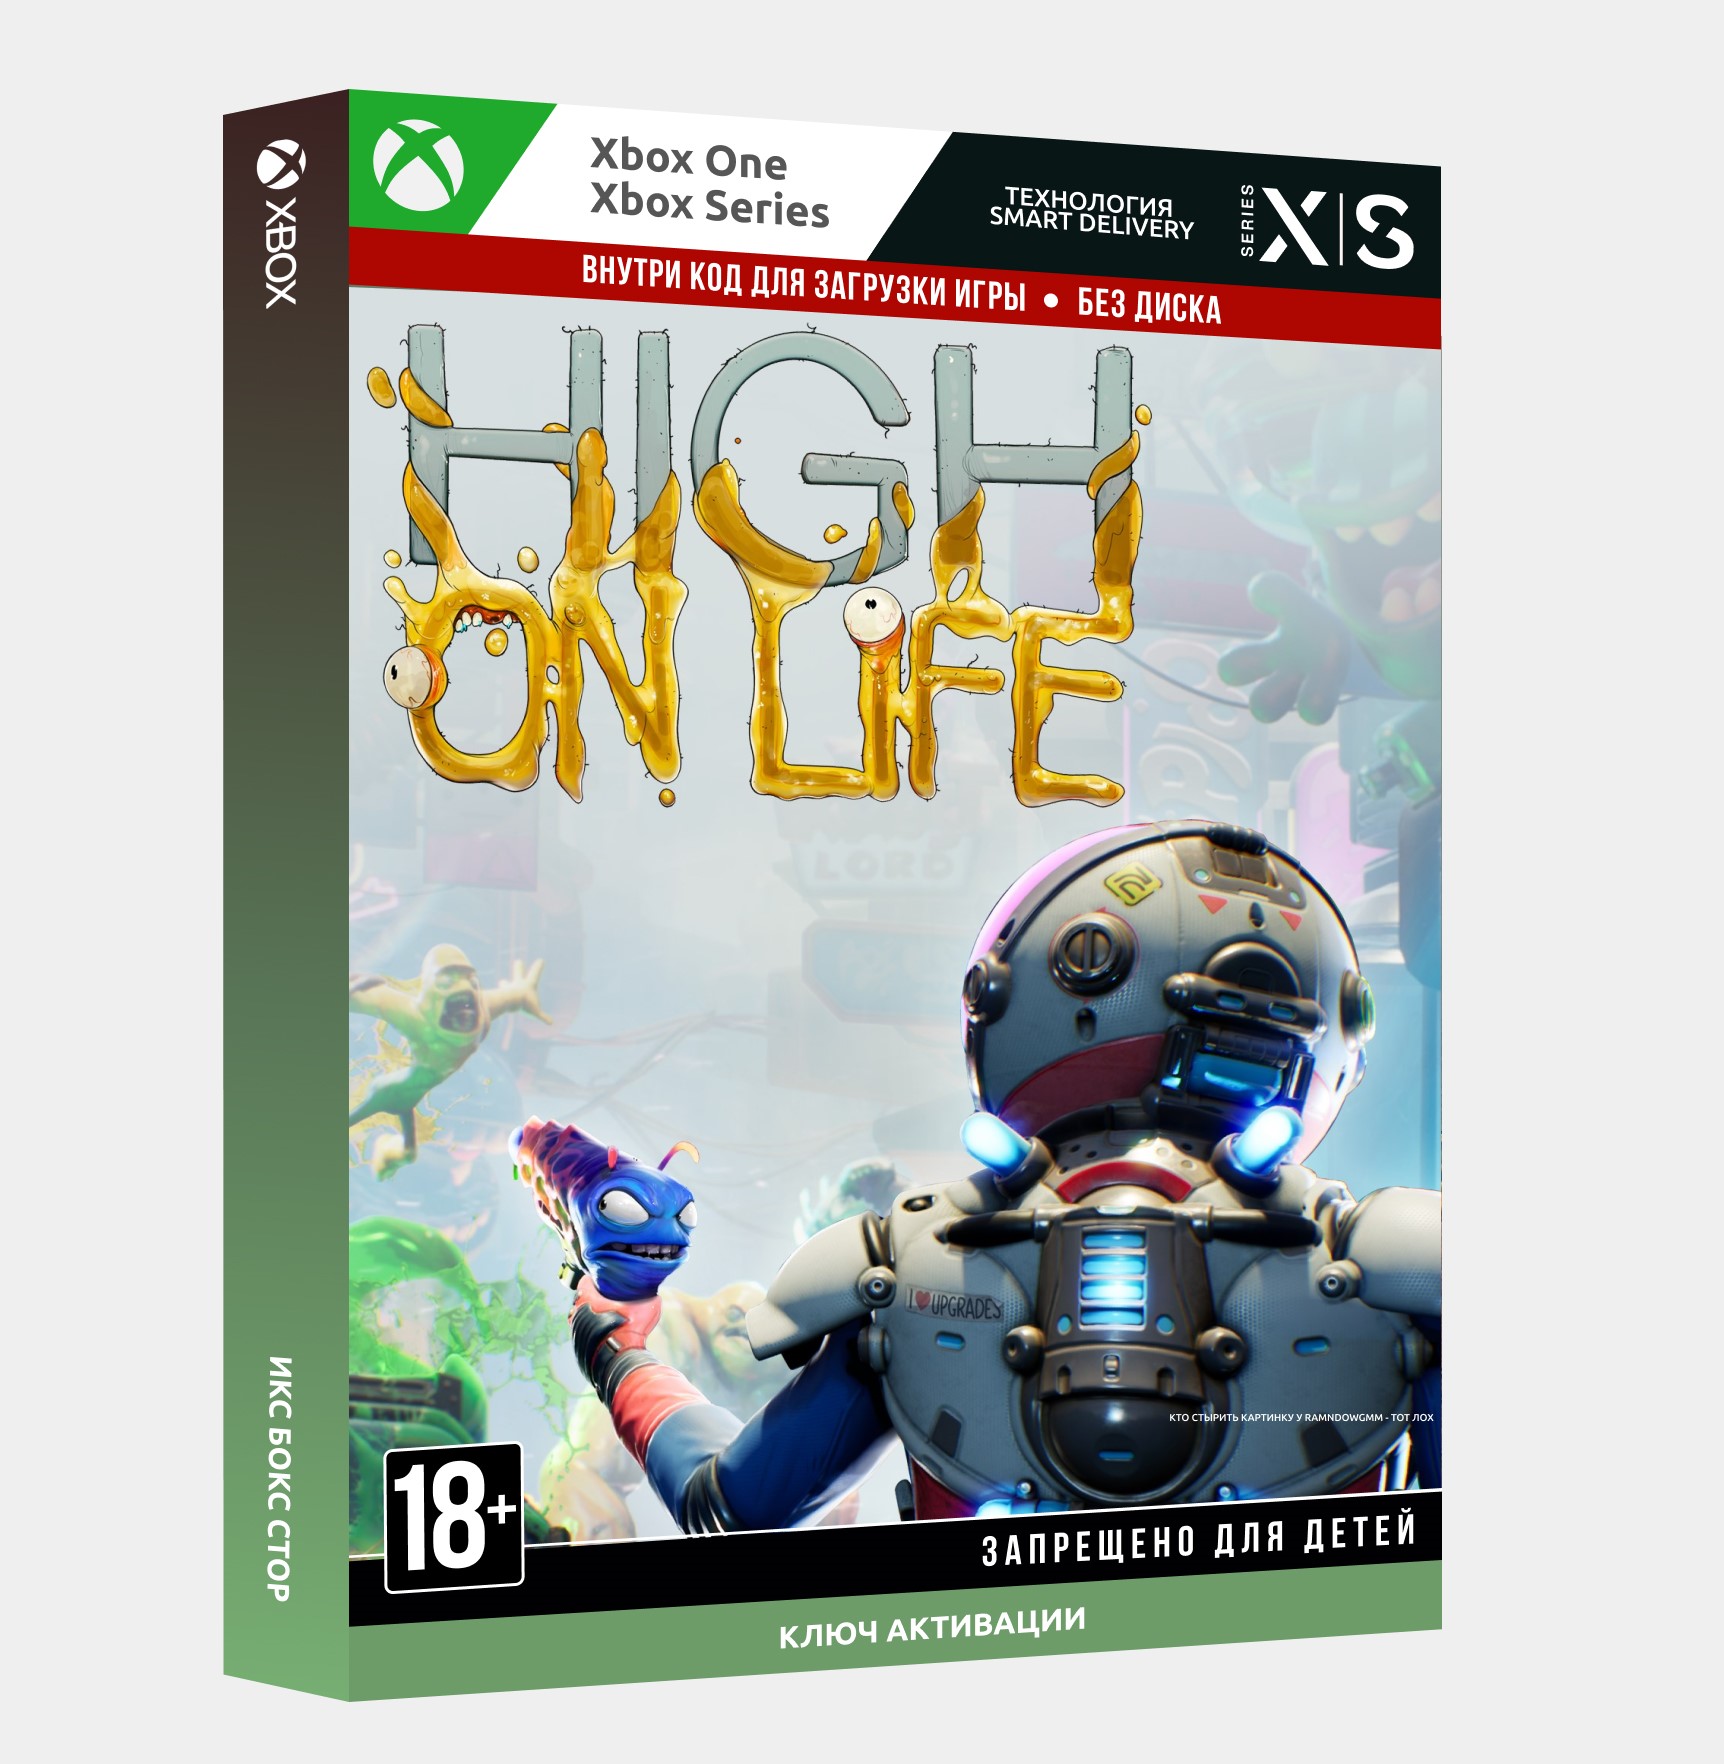 High On Life: DLC Bundle